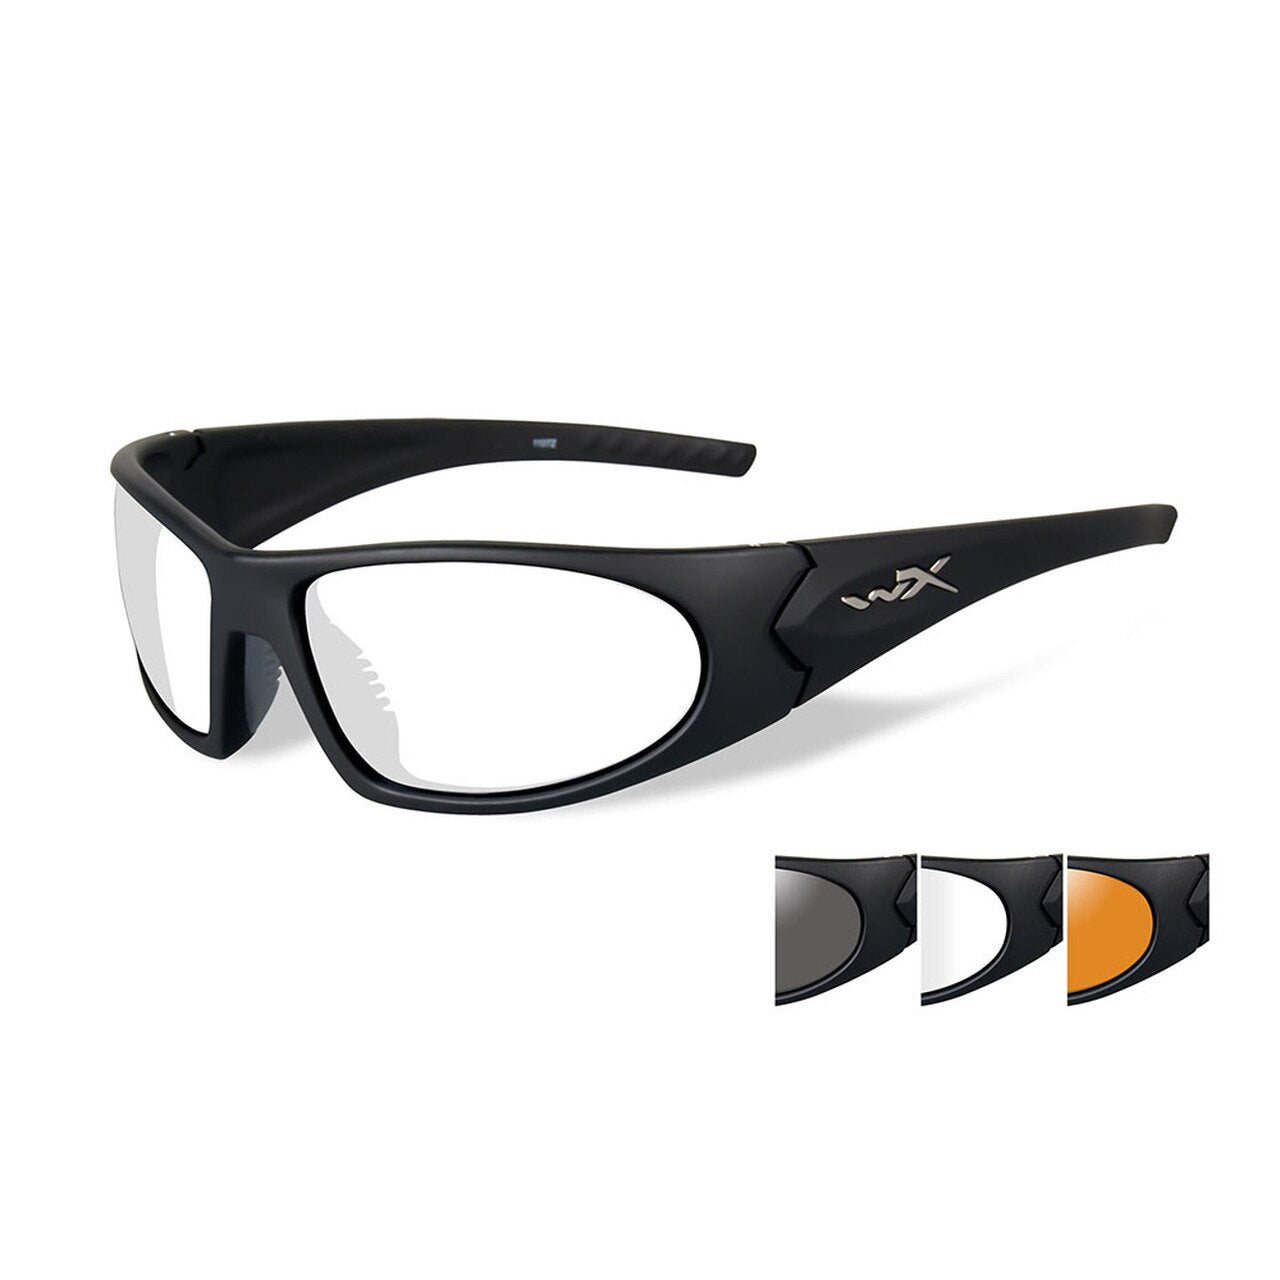 Wiley X Romer 3 Sunglasses Three Lens Matte Black Frame Tactical Distributors Ltd New Zealand